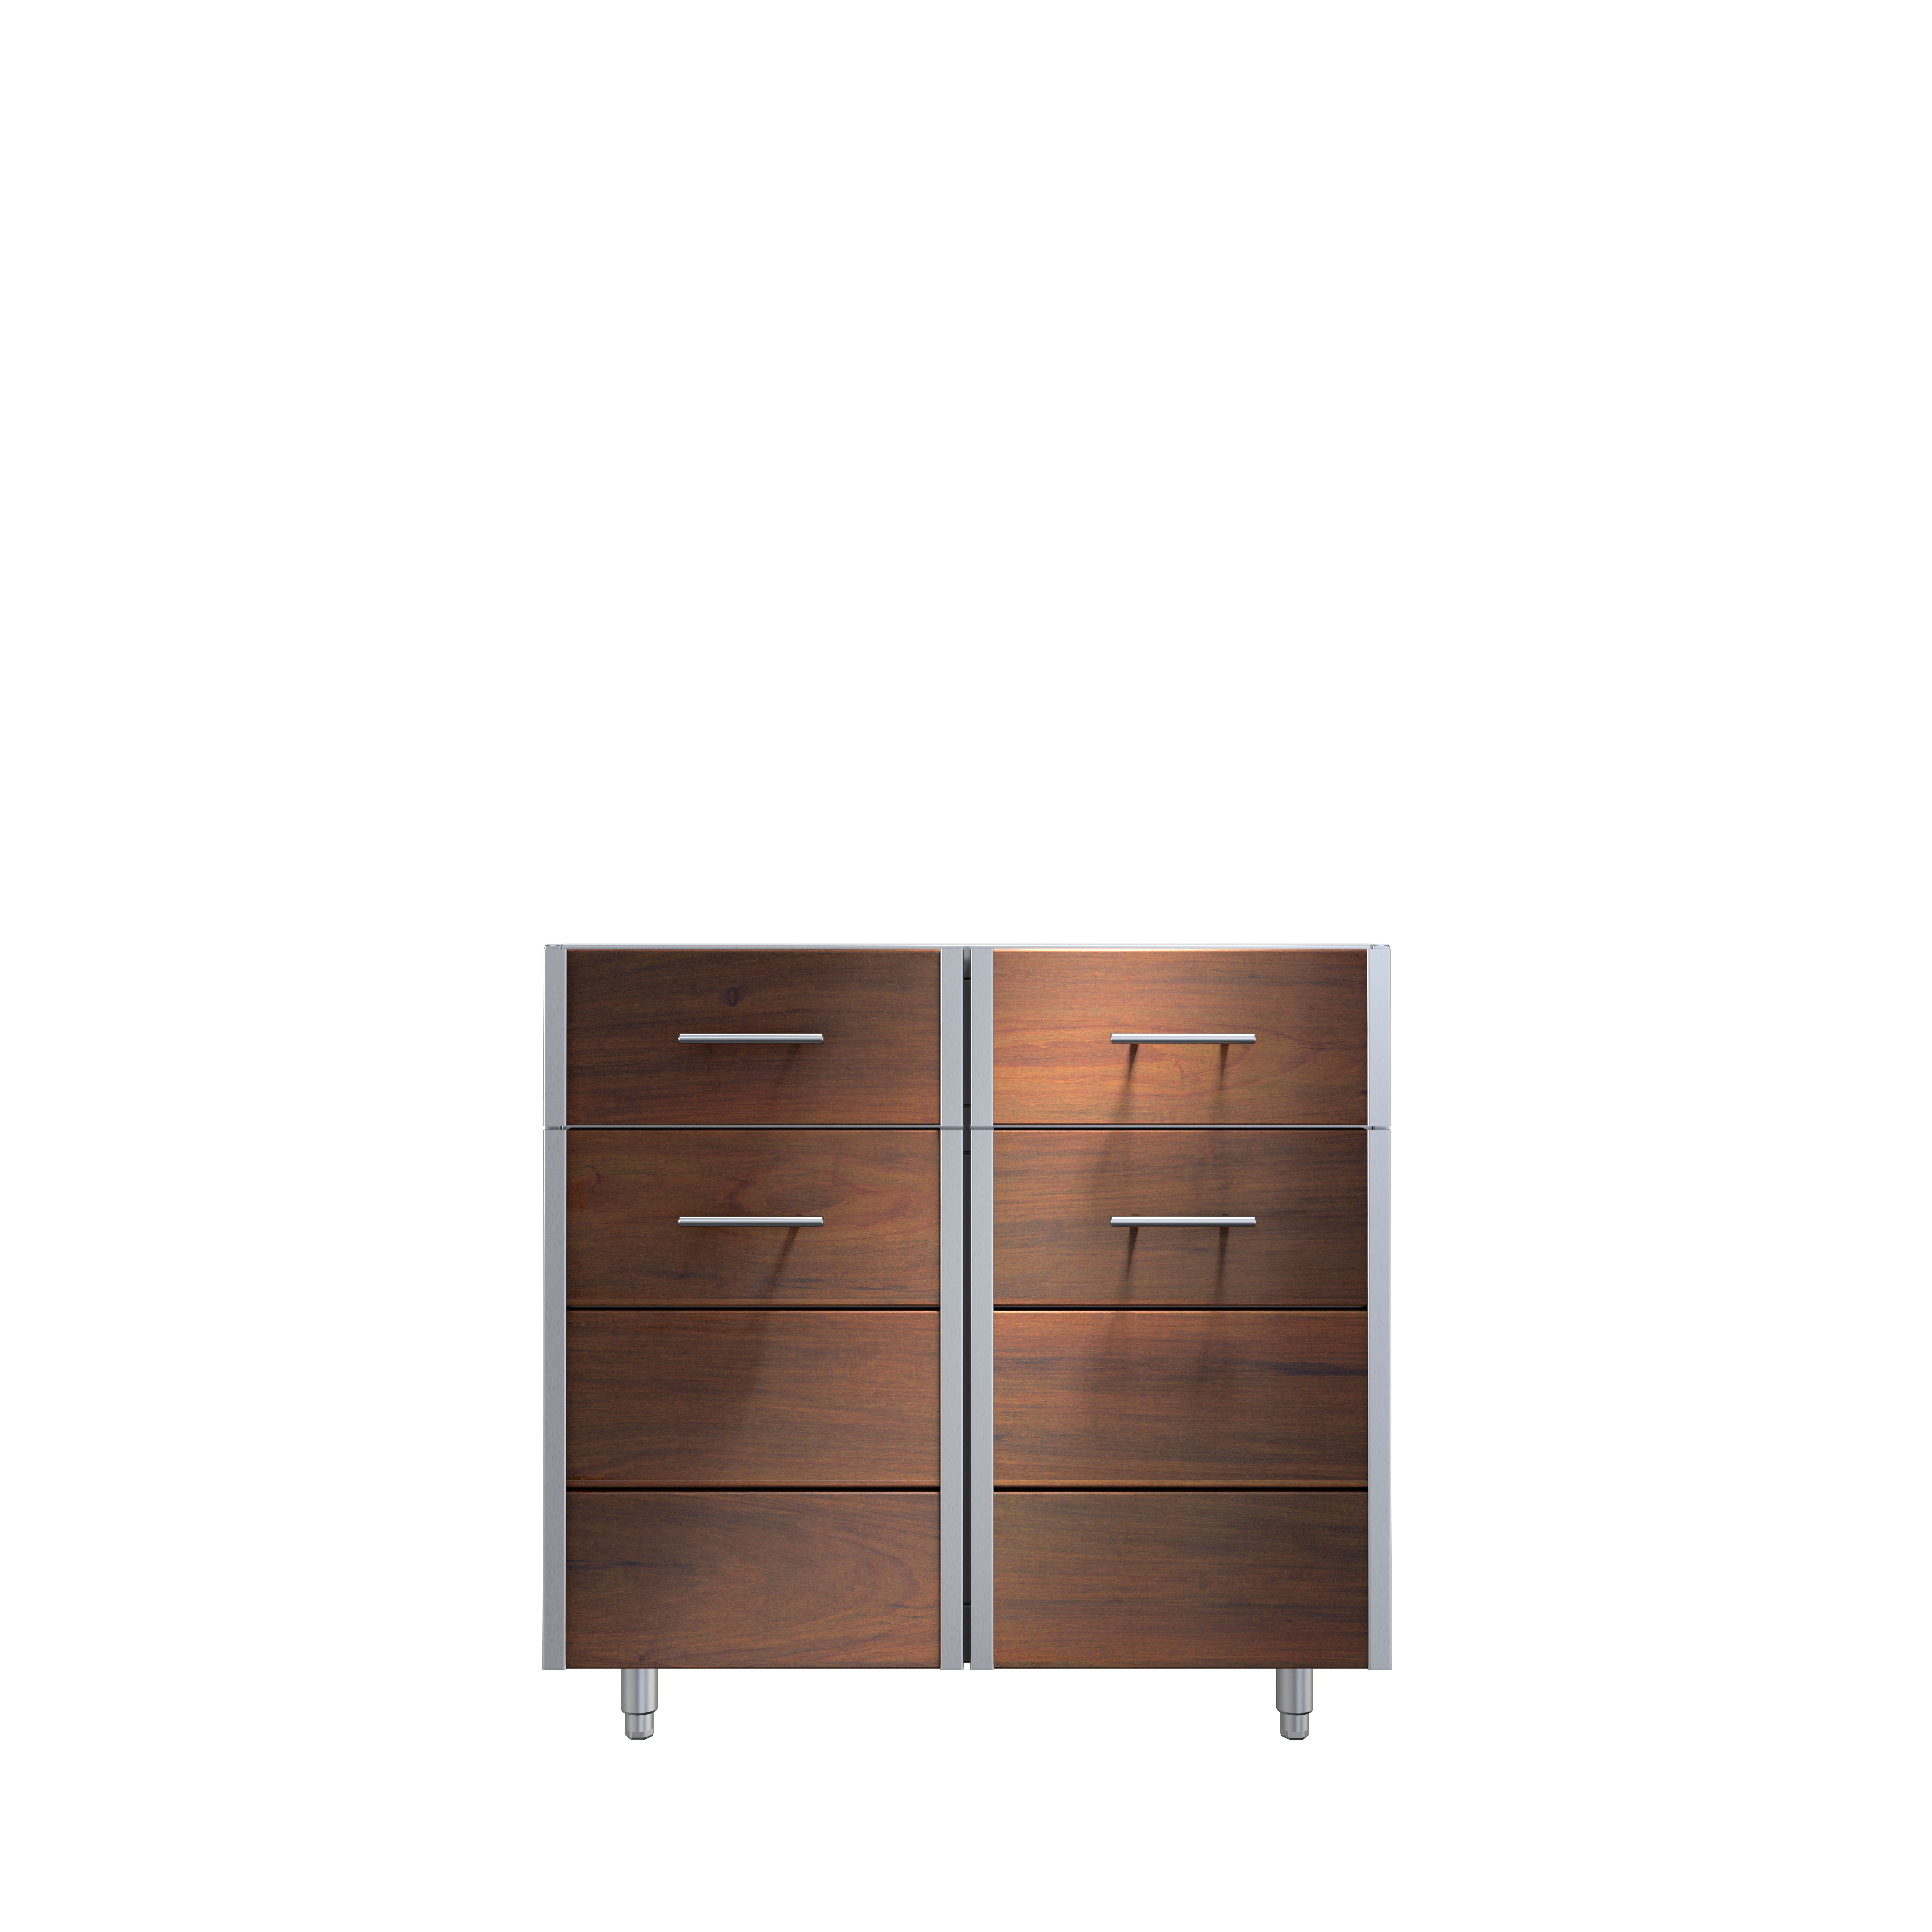 Kalamazoo's new Arcadia Cabinetry Series with oiled ipe wood